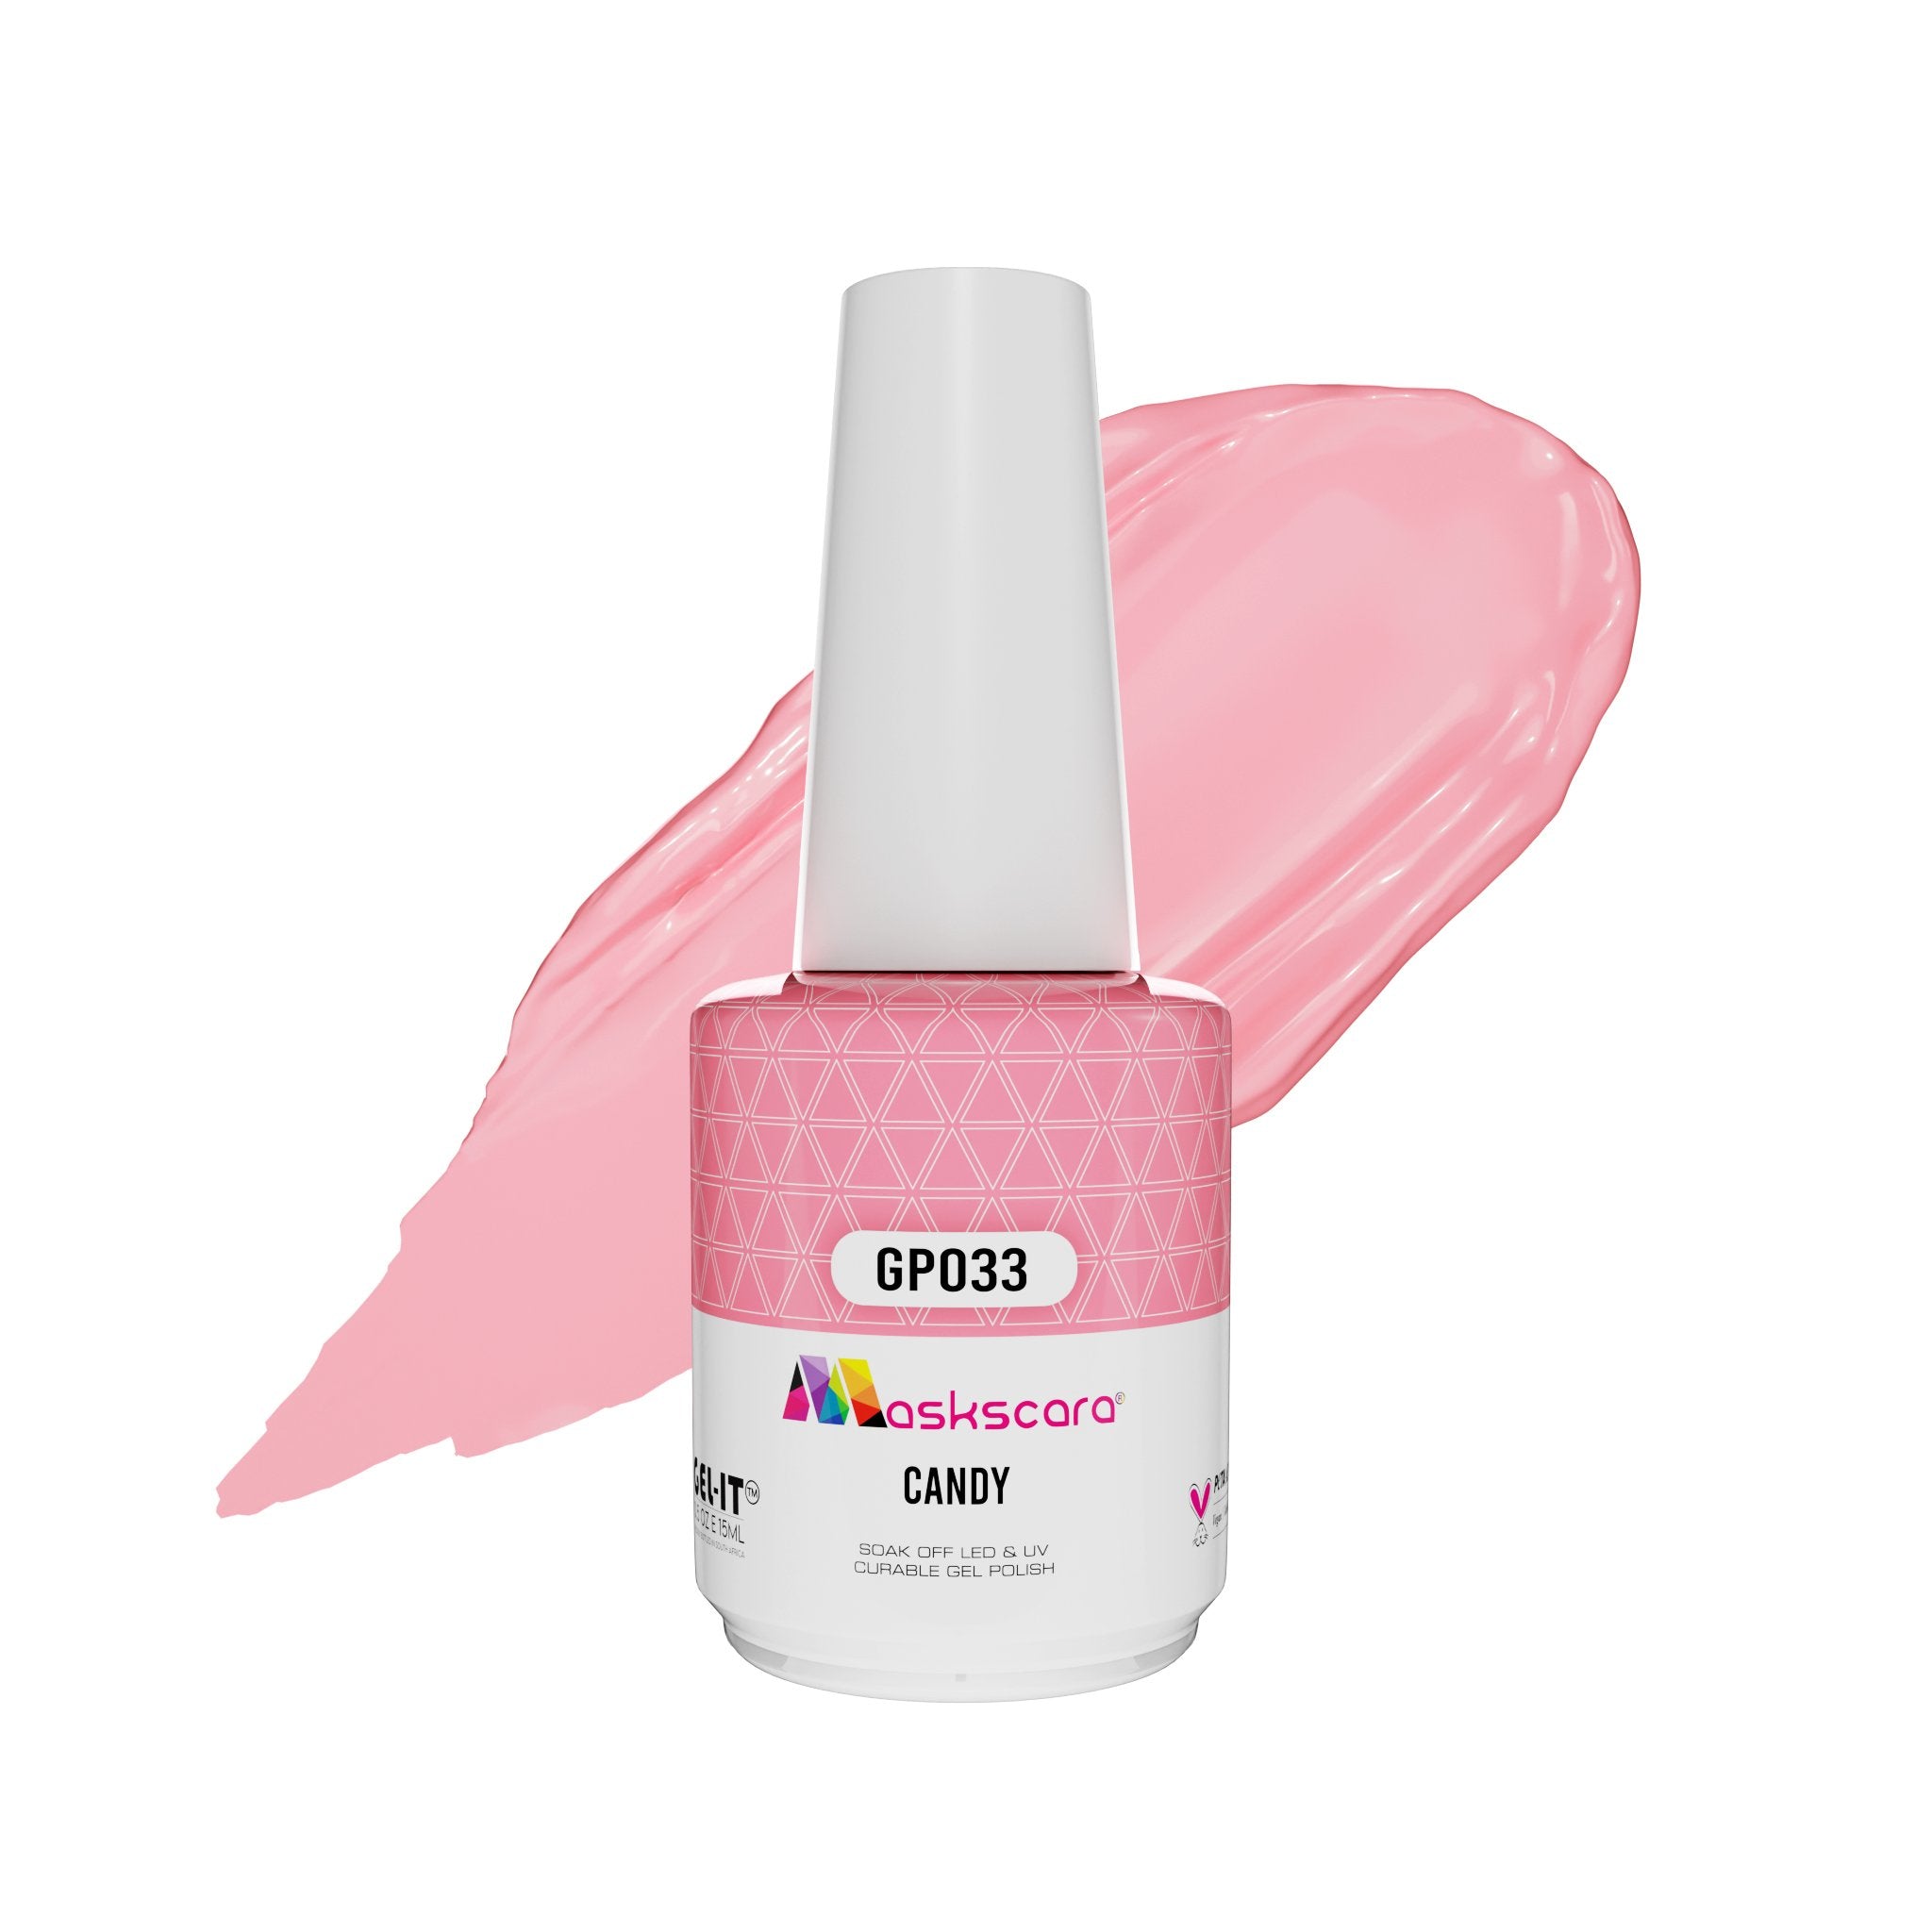 <img scr = “ GP033 Candy.jpeg” alt = “Candy Pink gel polish colour by the brand Maskscara”>